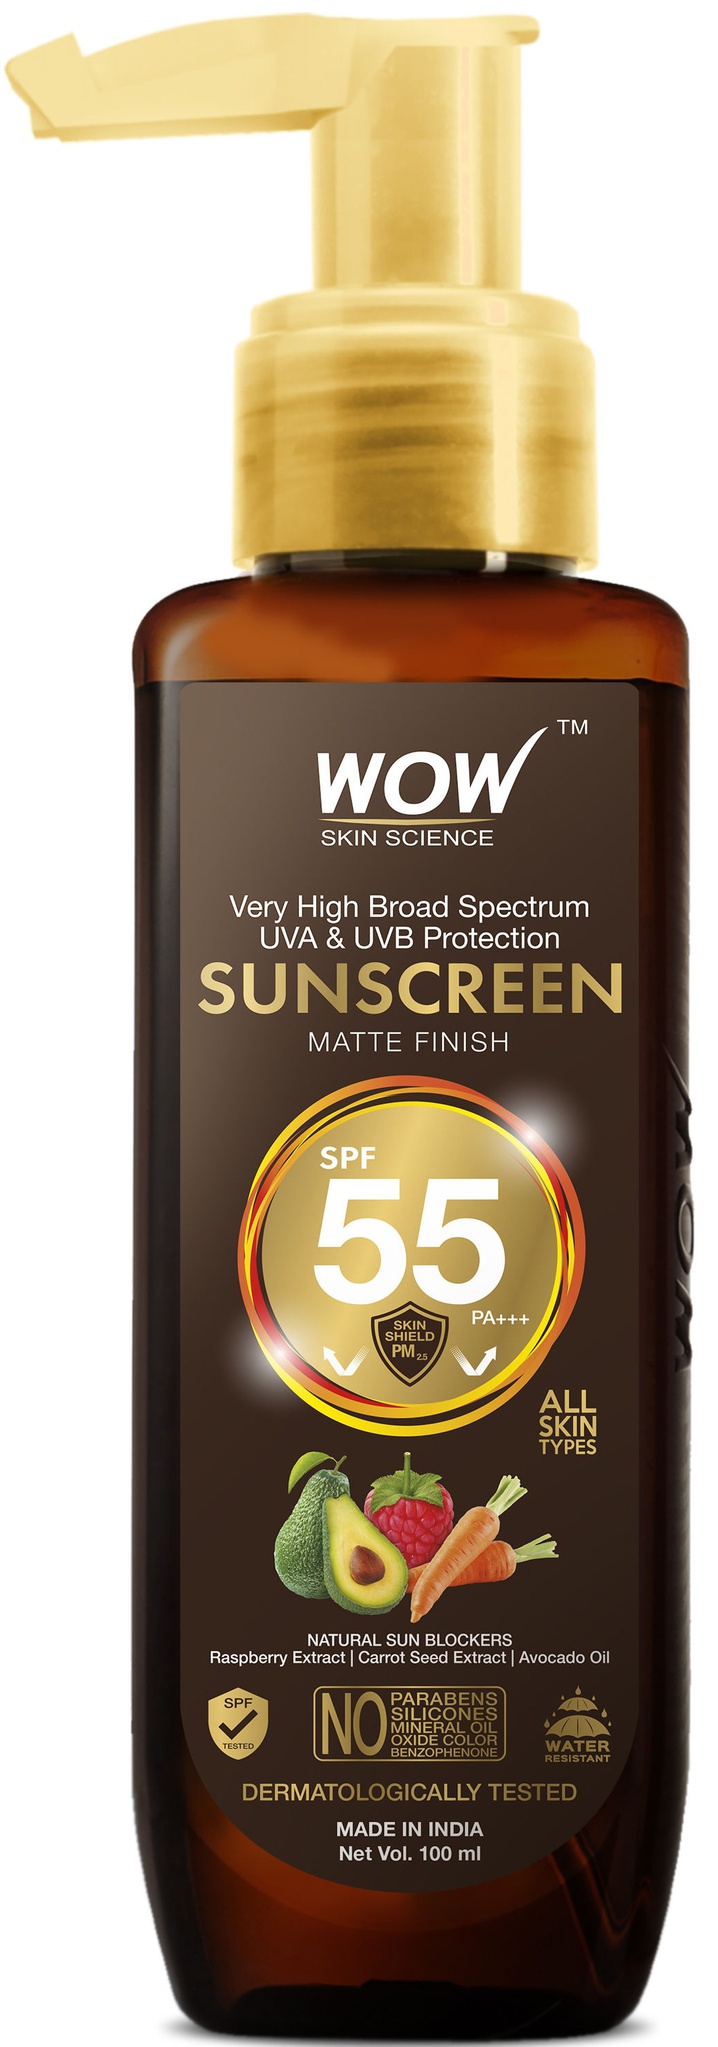 WOW skin science Matte Finish Sunscreen SPF 55 Pa+++